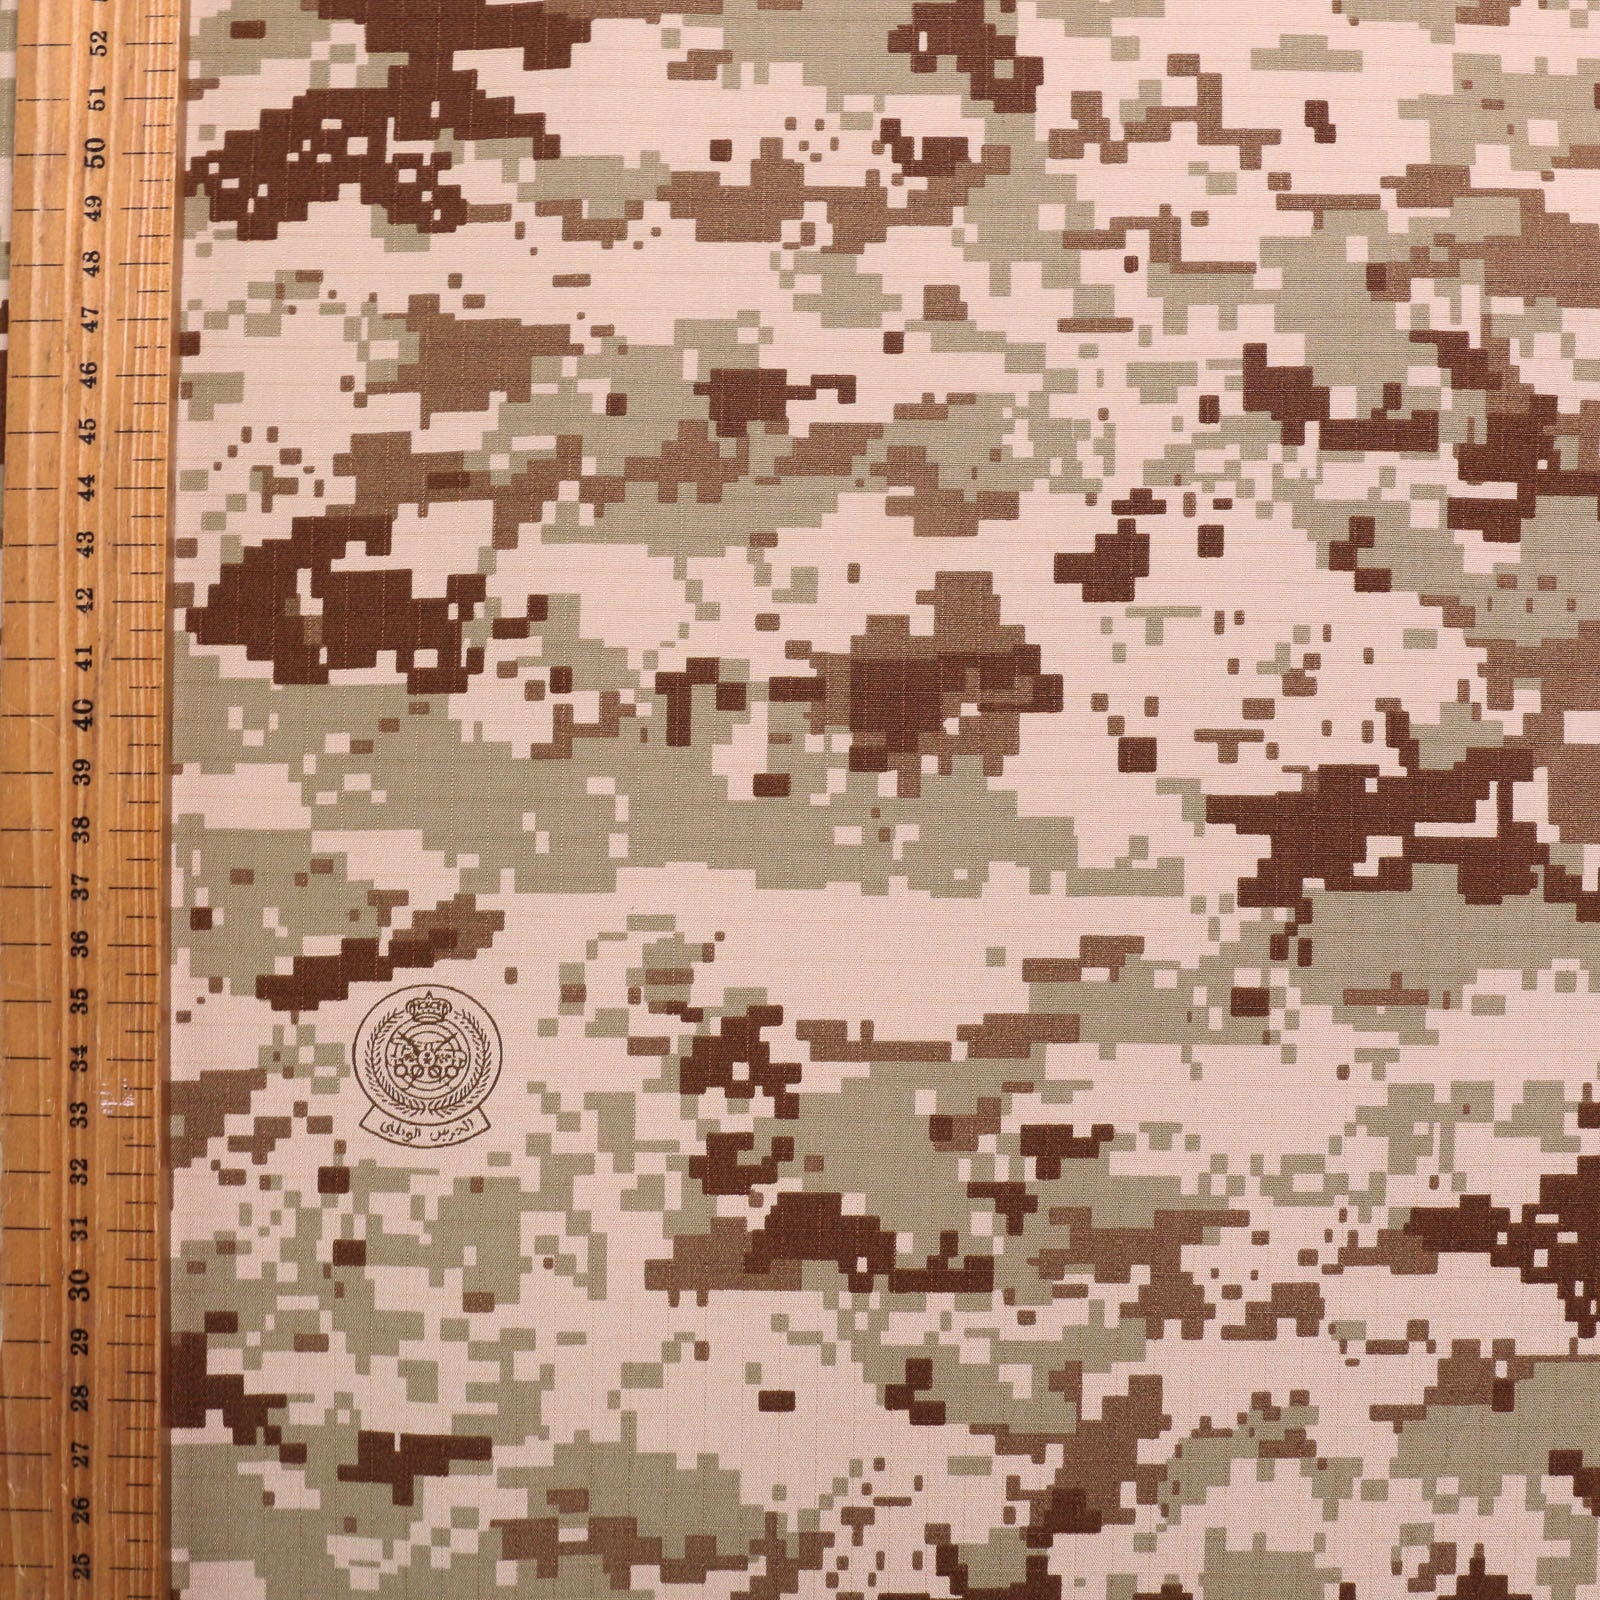 metre digital desert camouflage dressmaking cotton ripstop fabric in khaki green beige and brown